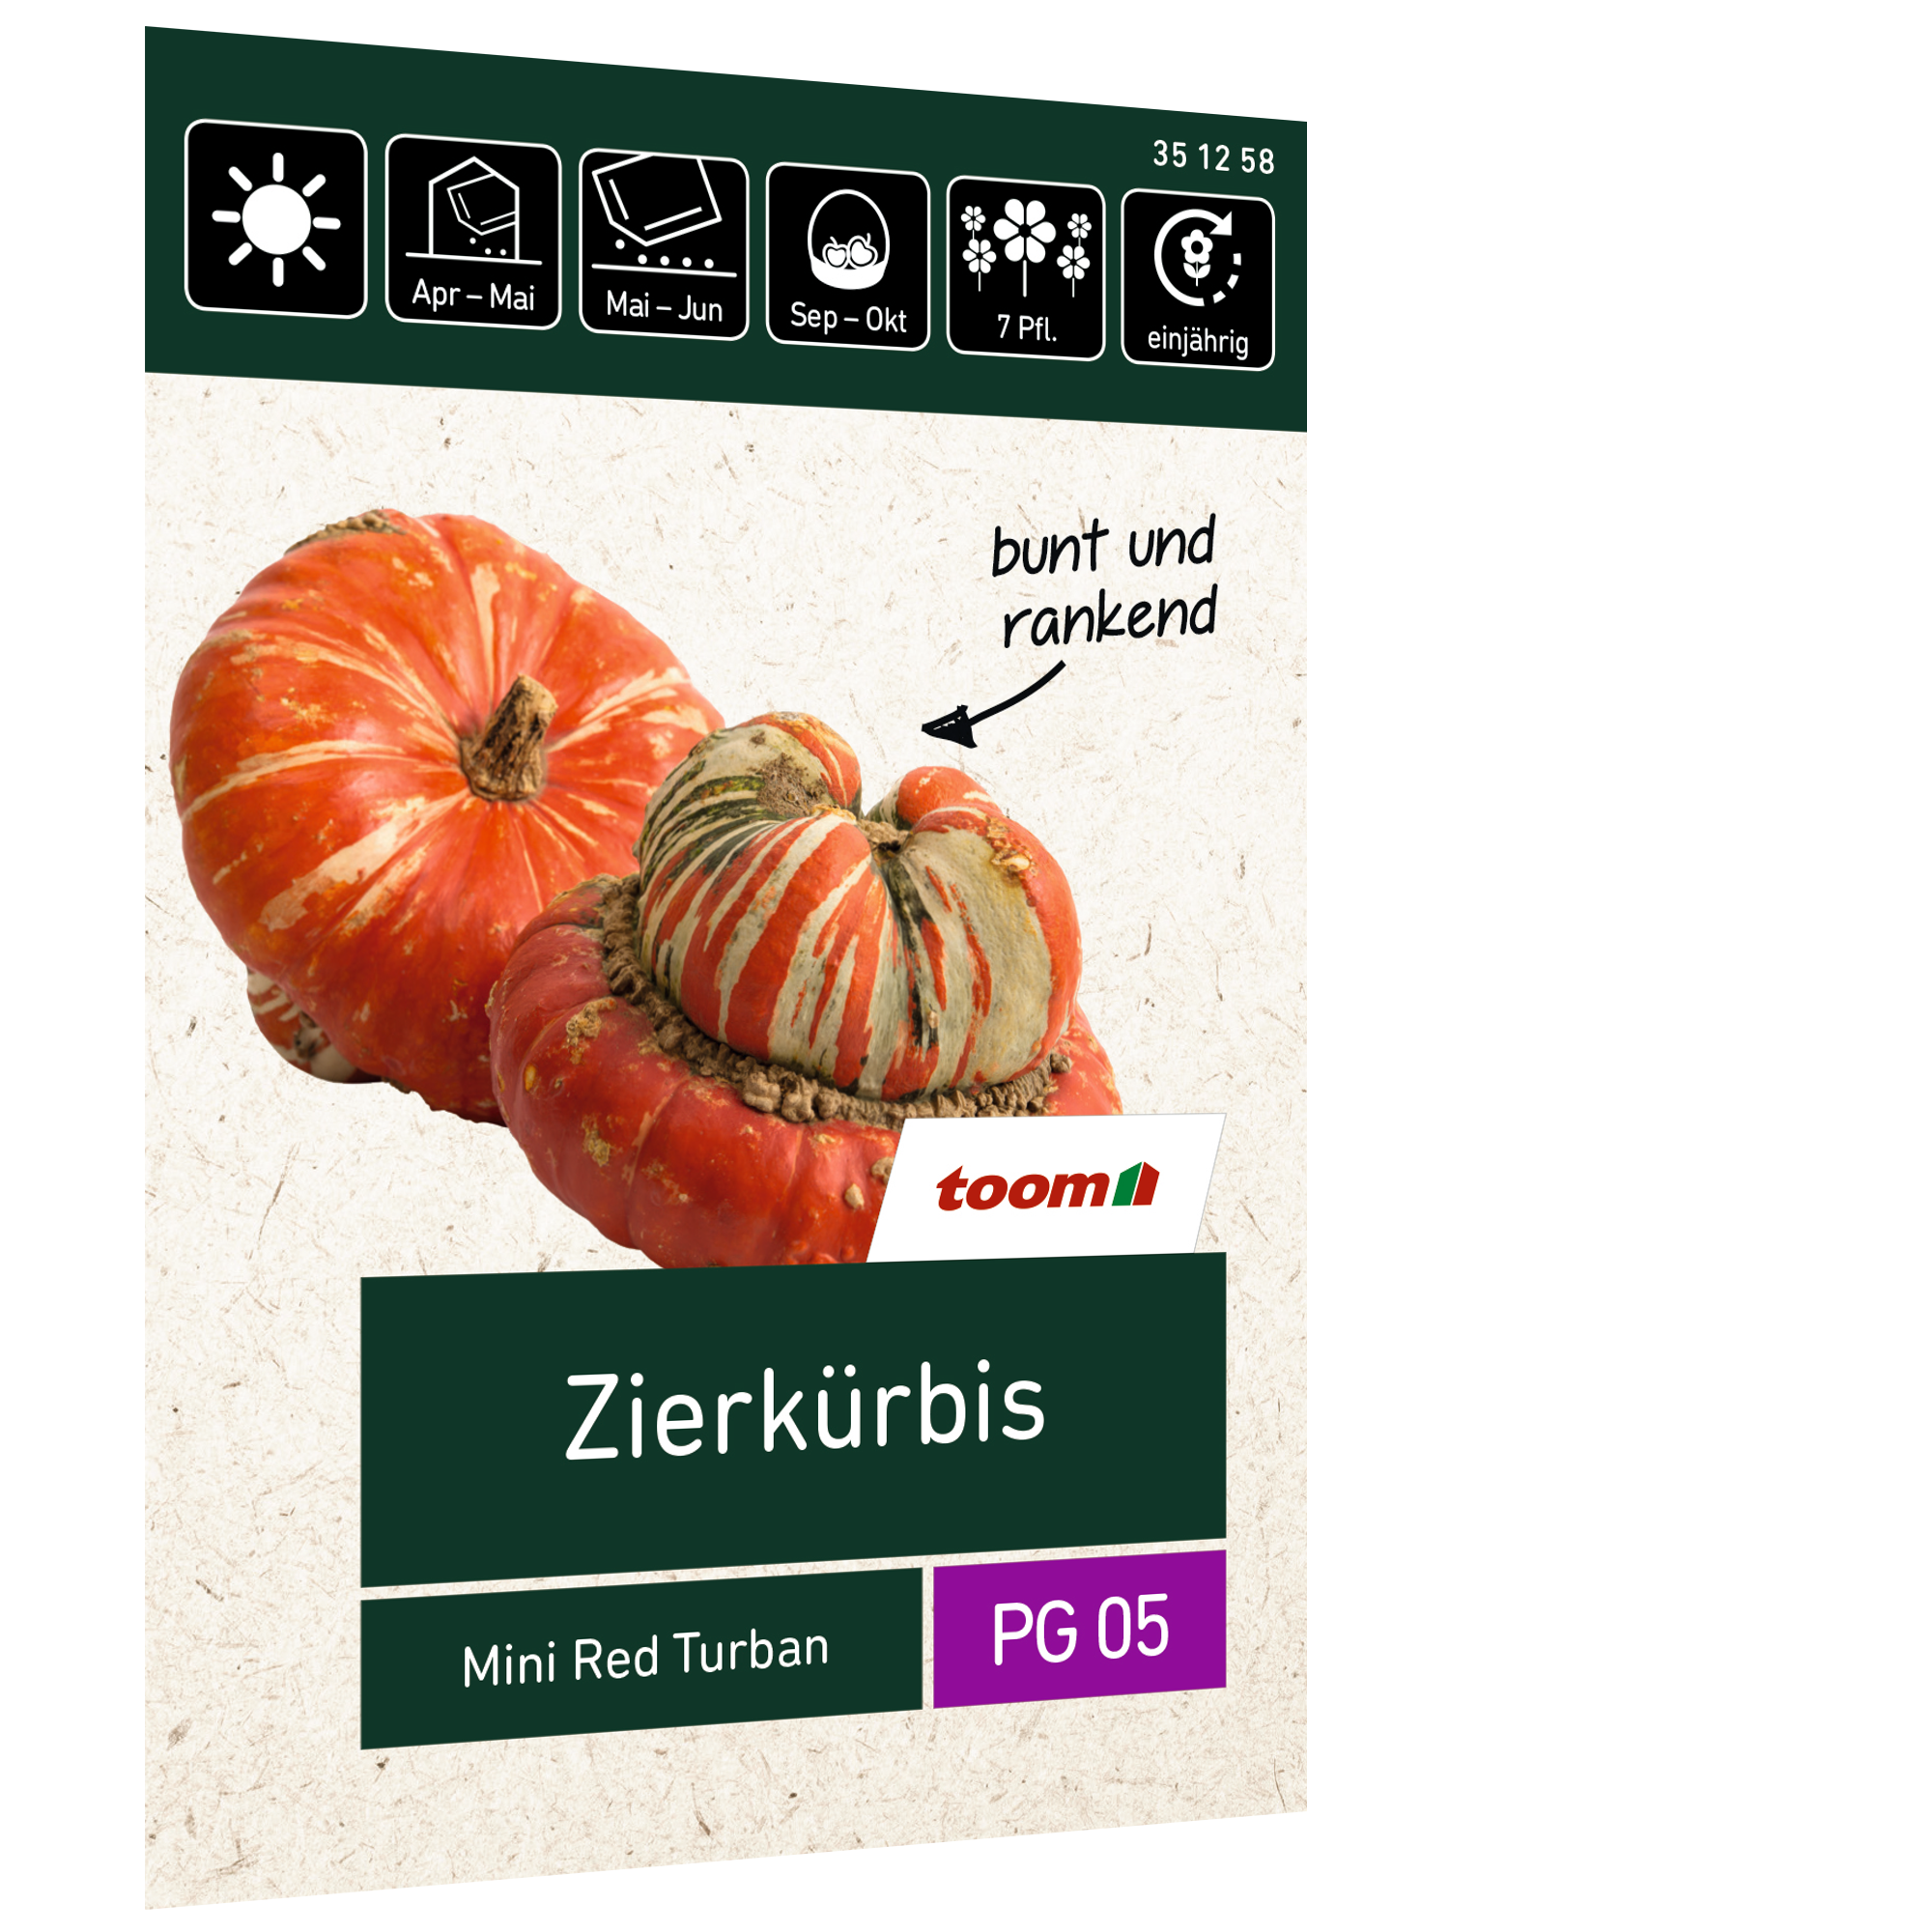 Zierkürbis 'Mini Red Turban' + product picture